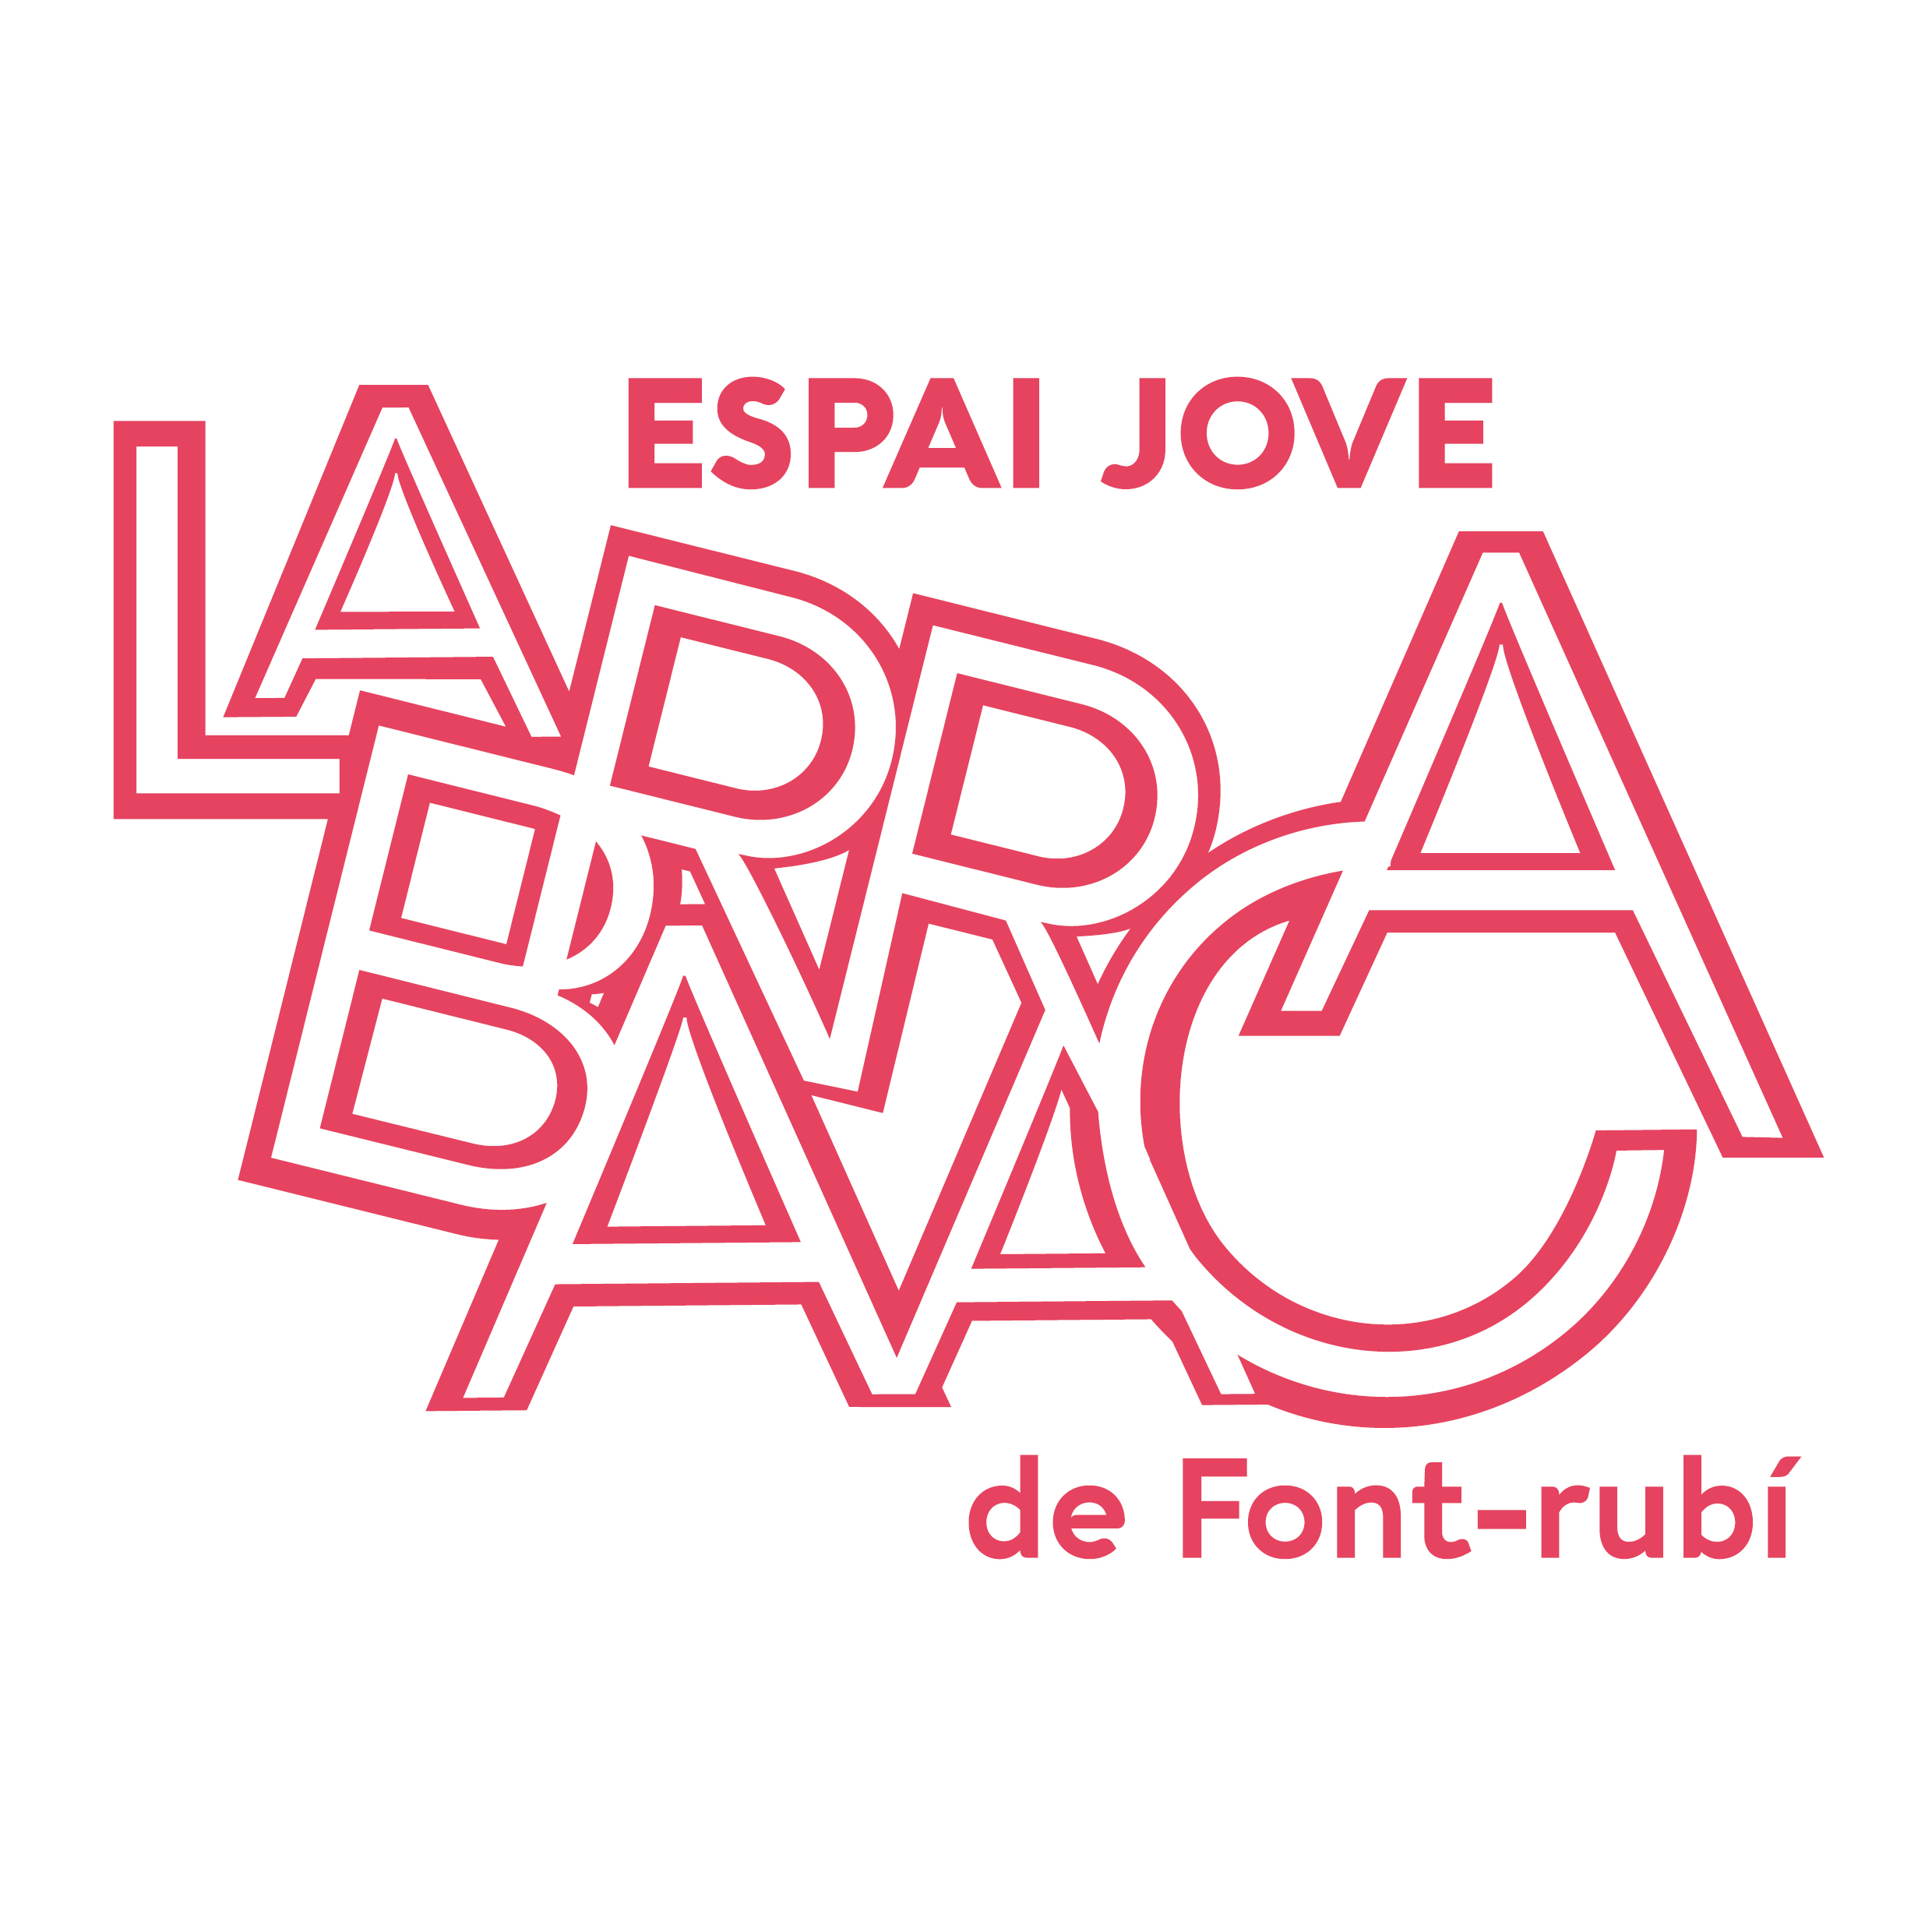 Logos Espai Jove La Barraca